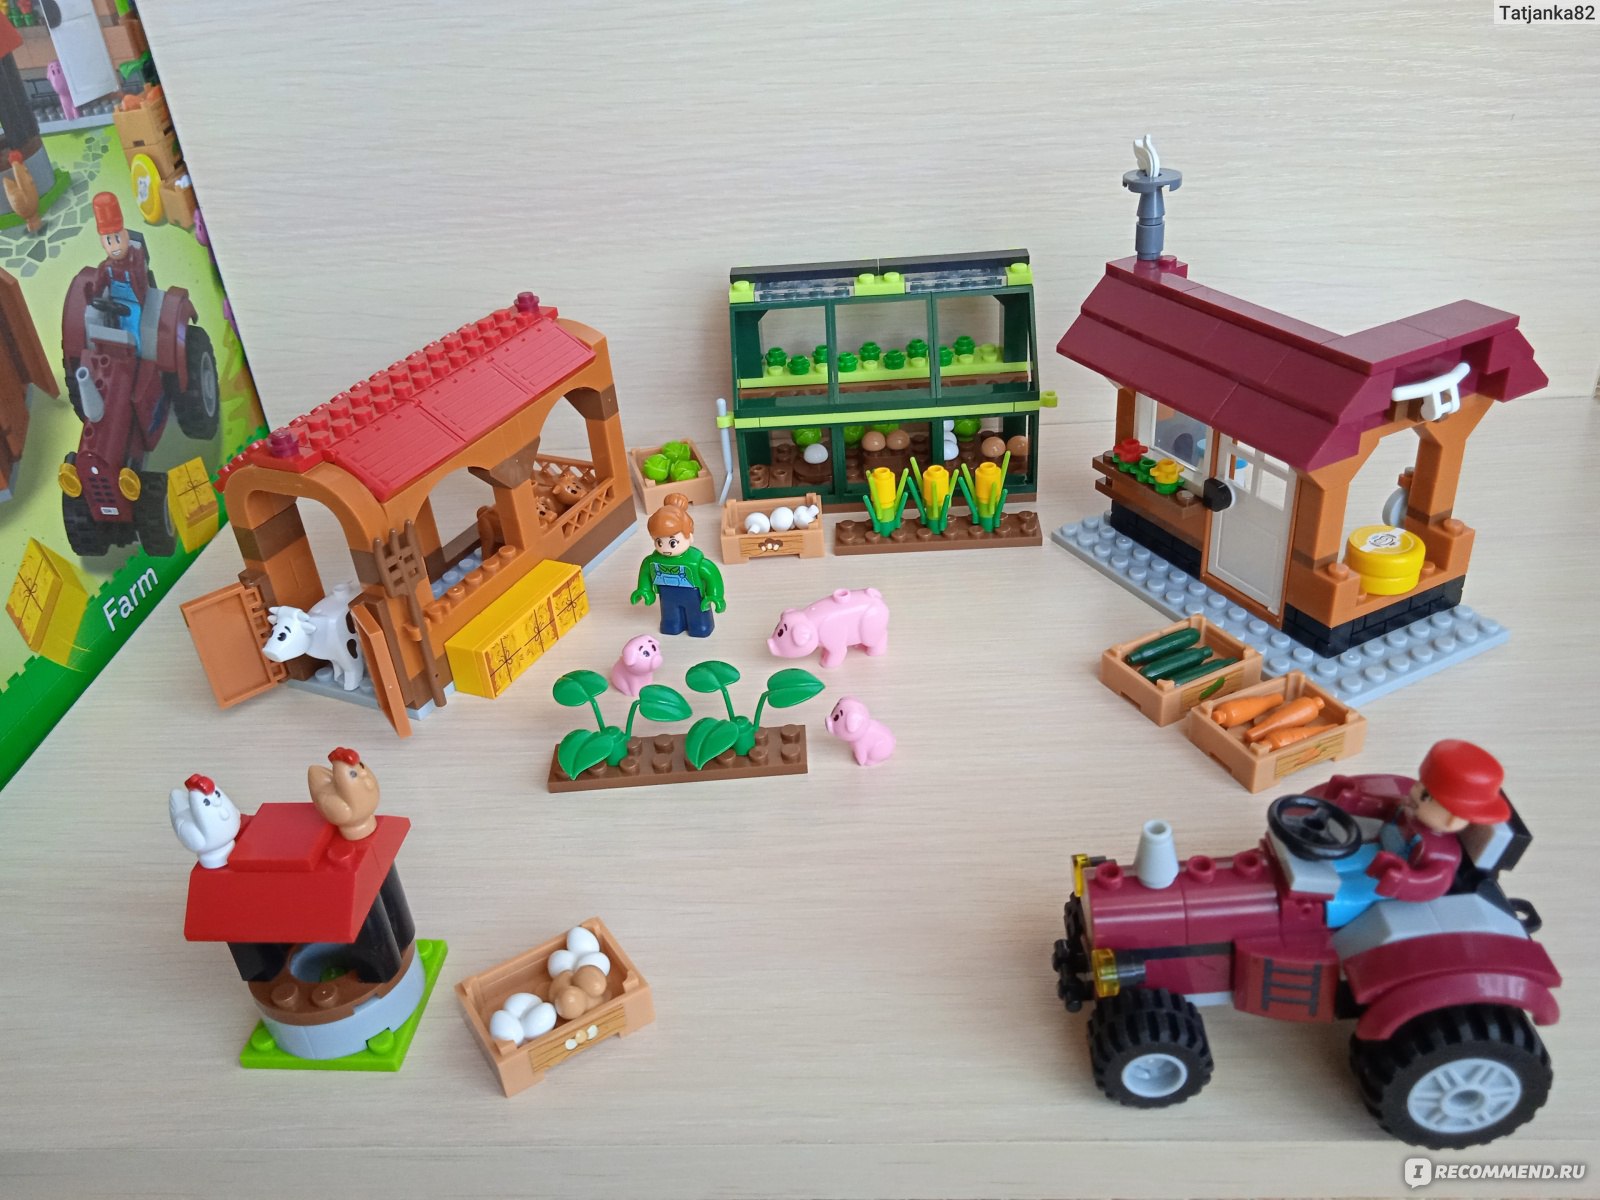  конструктор Kids bricks Ферма